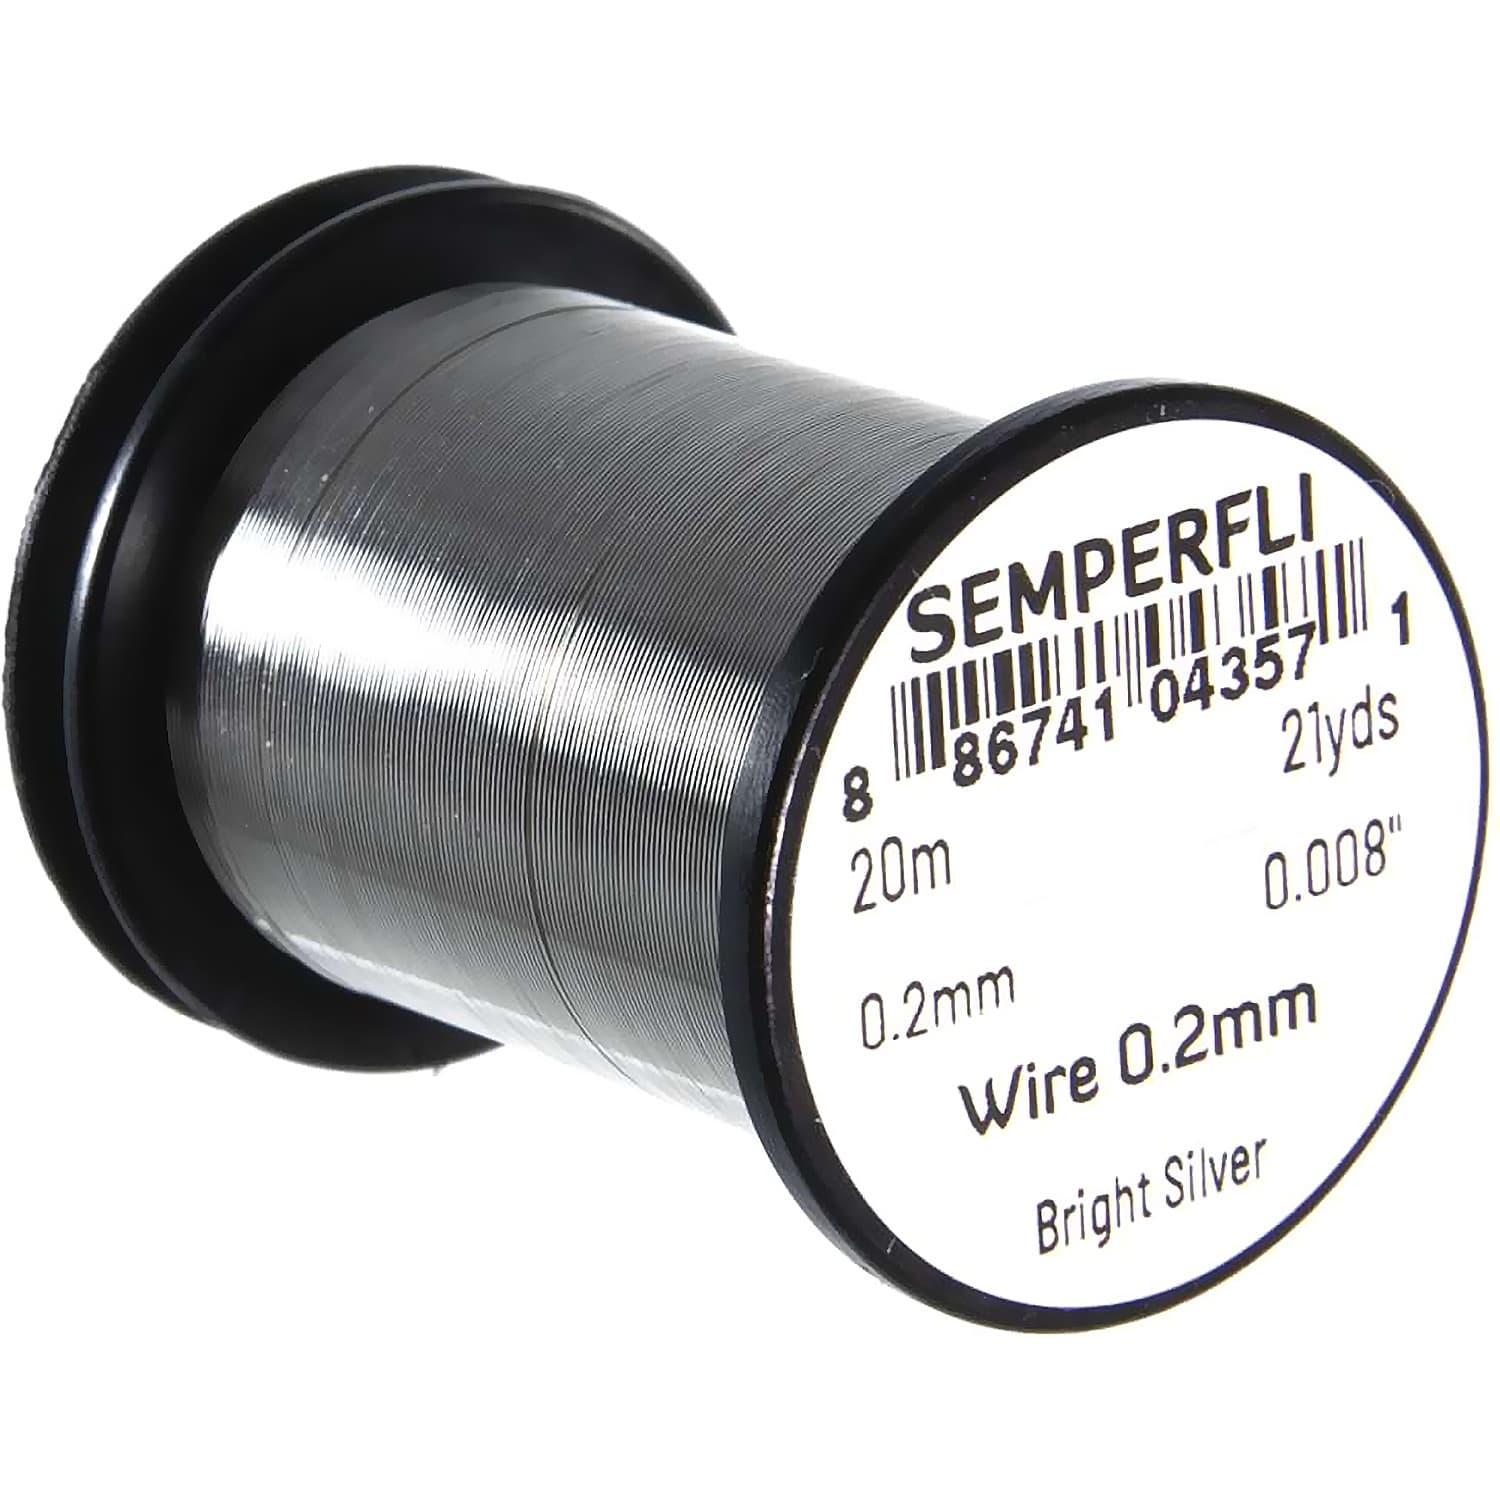 Semperfli Lure/Streamer 0.2mm Wire